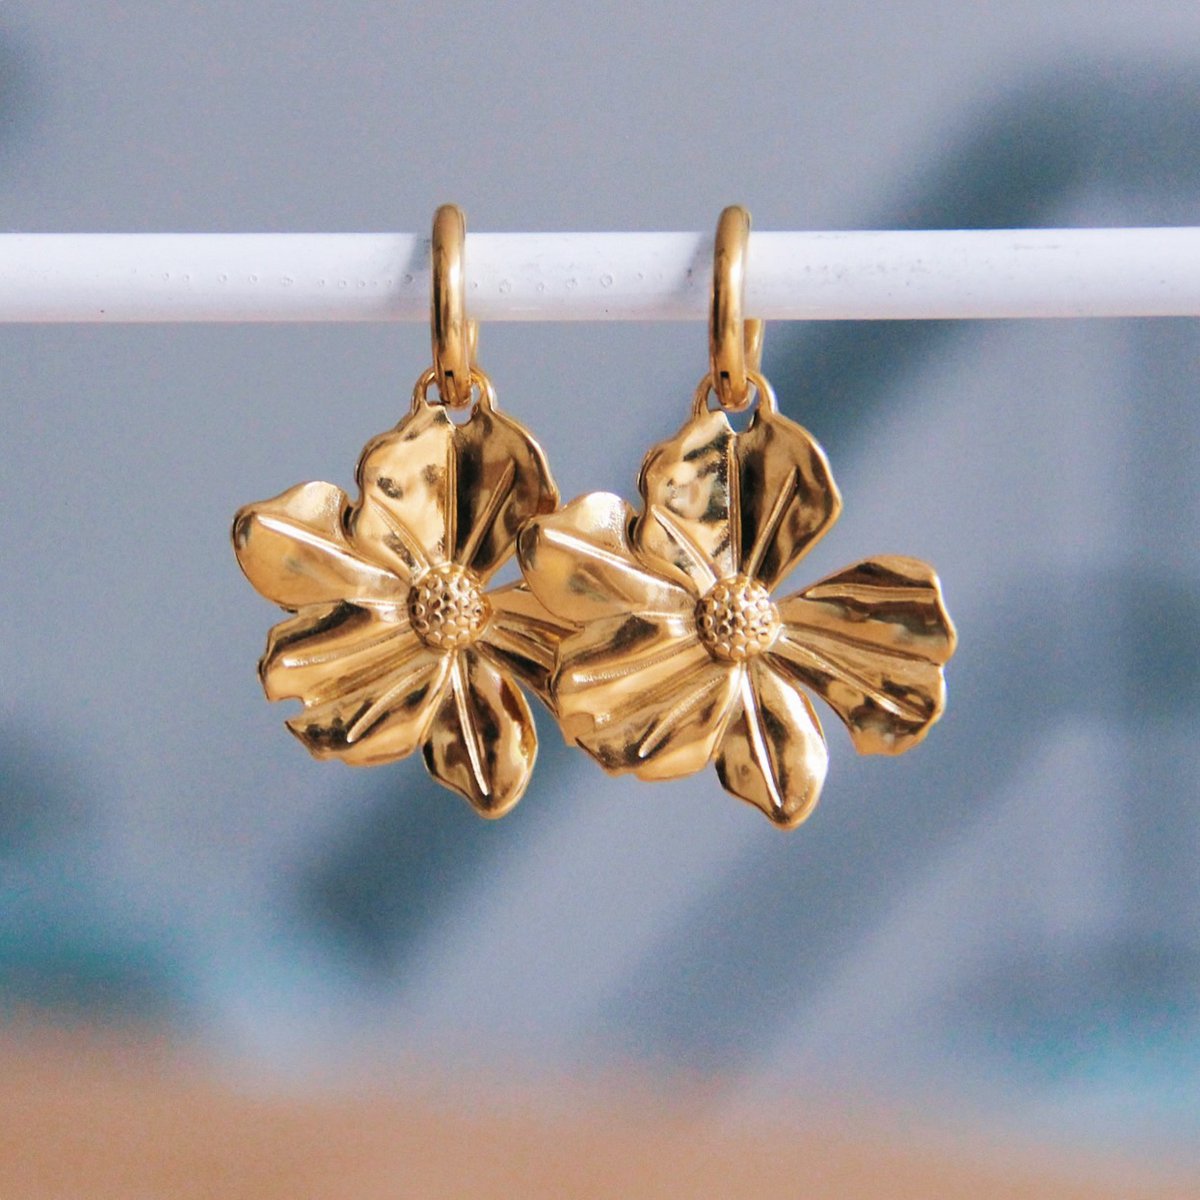 Stainless steel hoop earrings with XL flower - gold